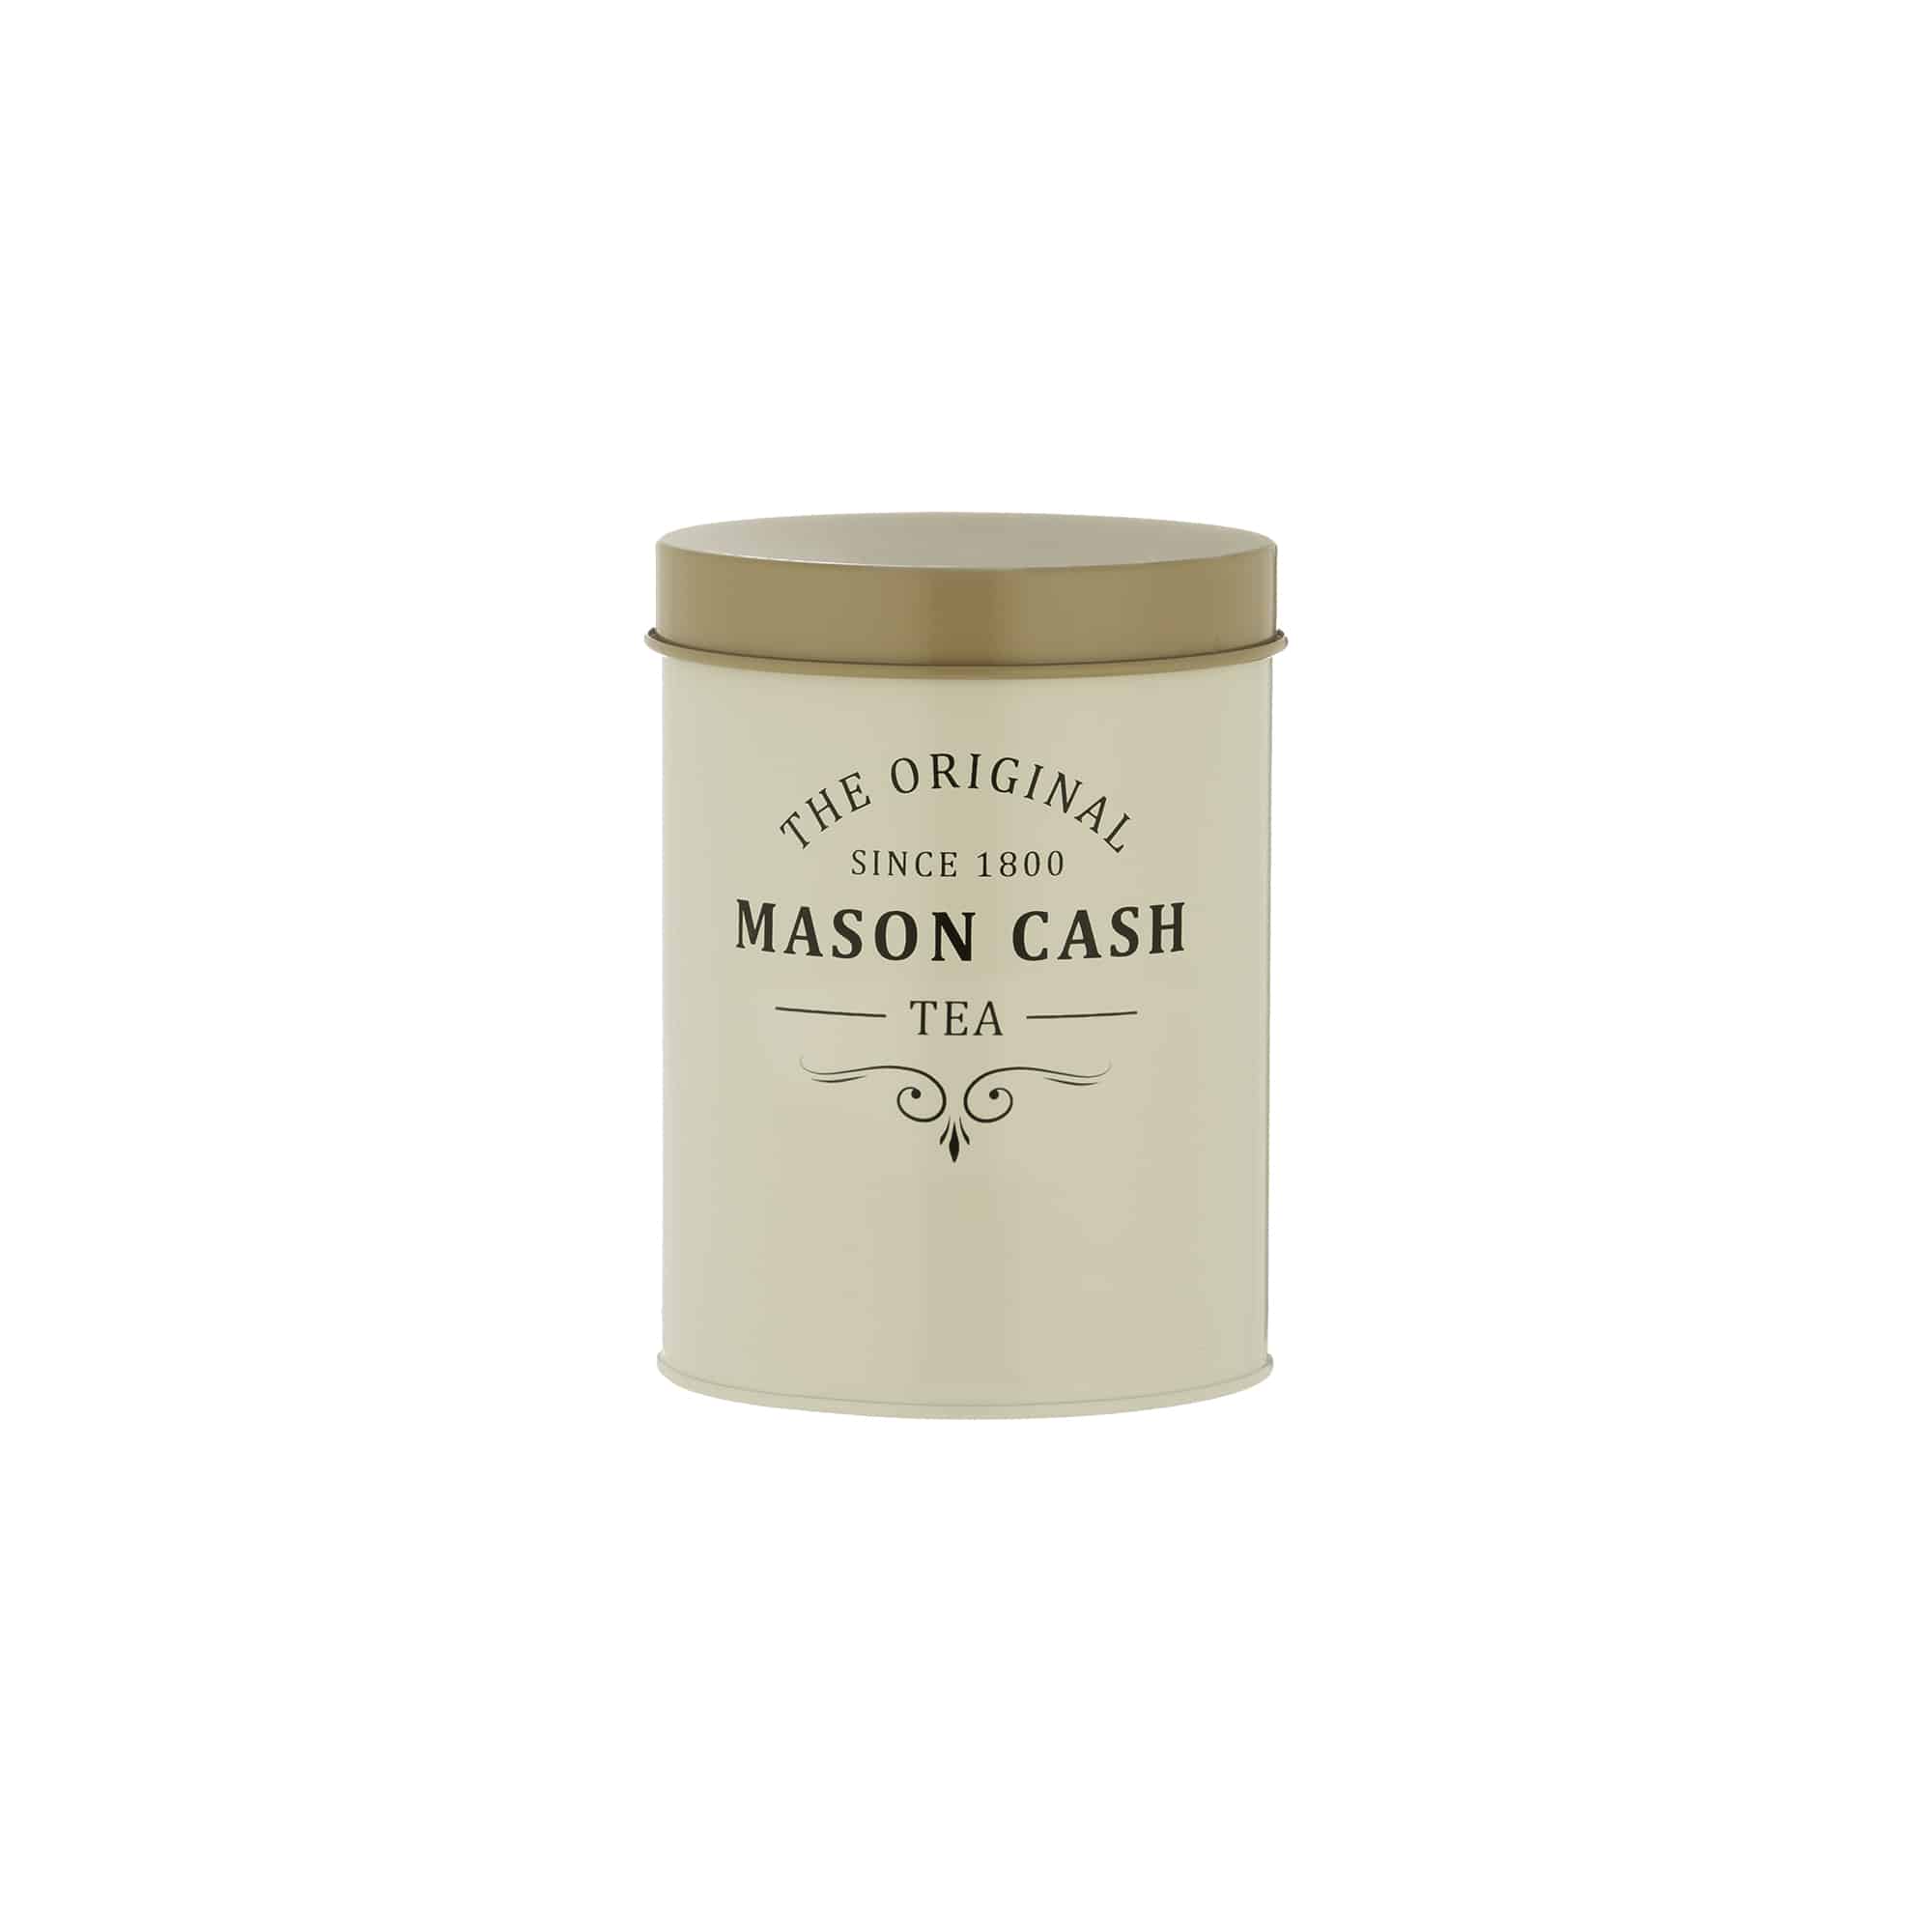 Mason Cash Heritage Tea Canister